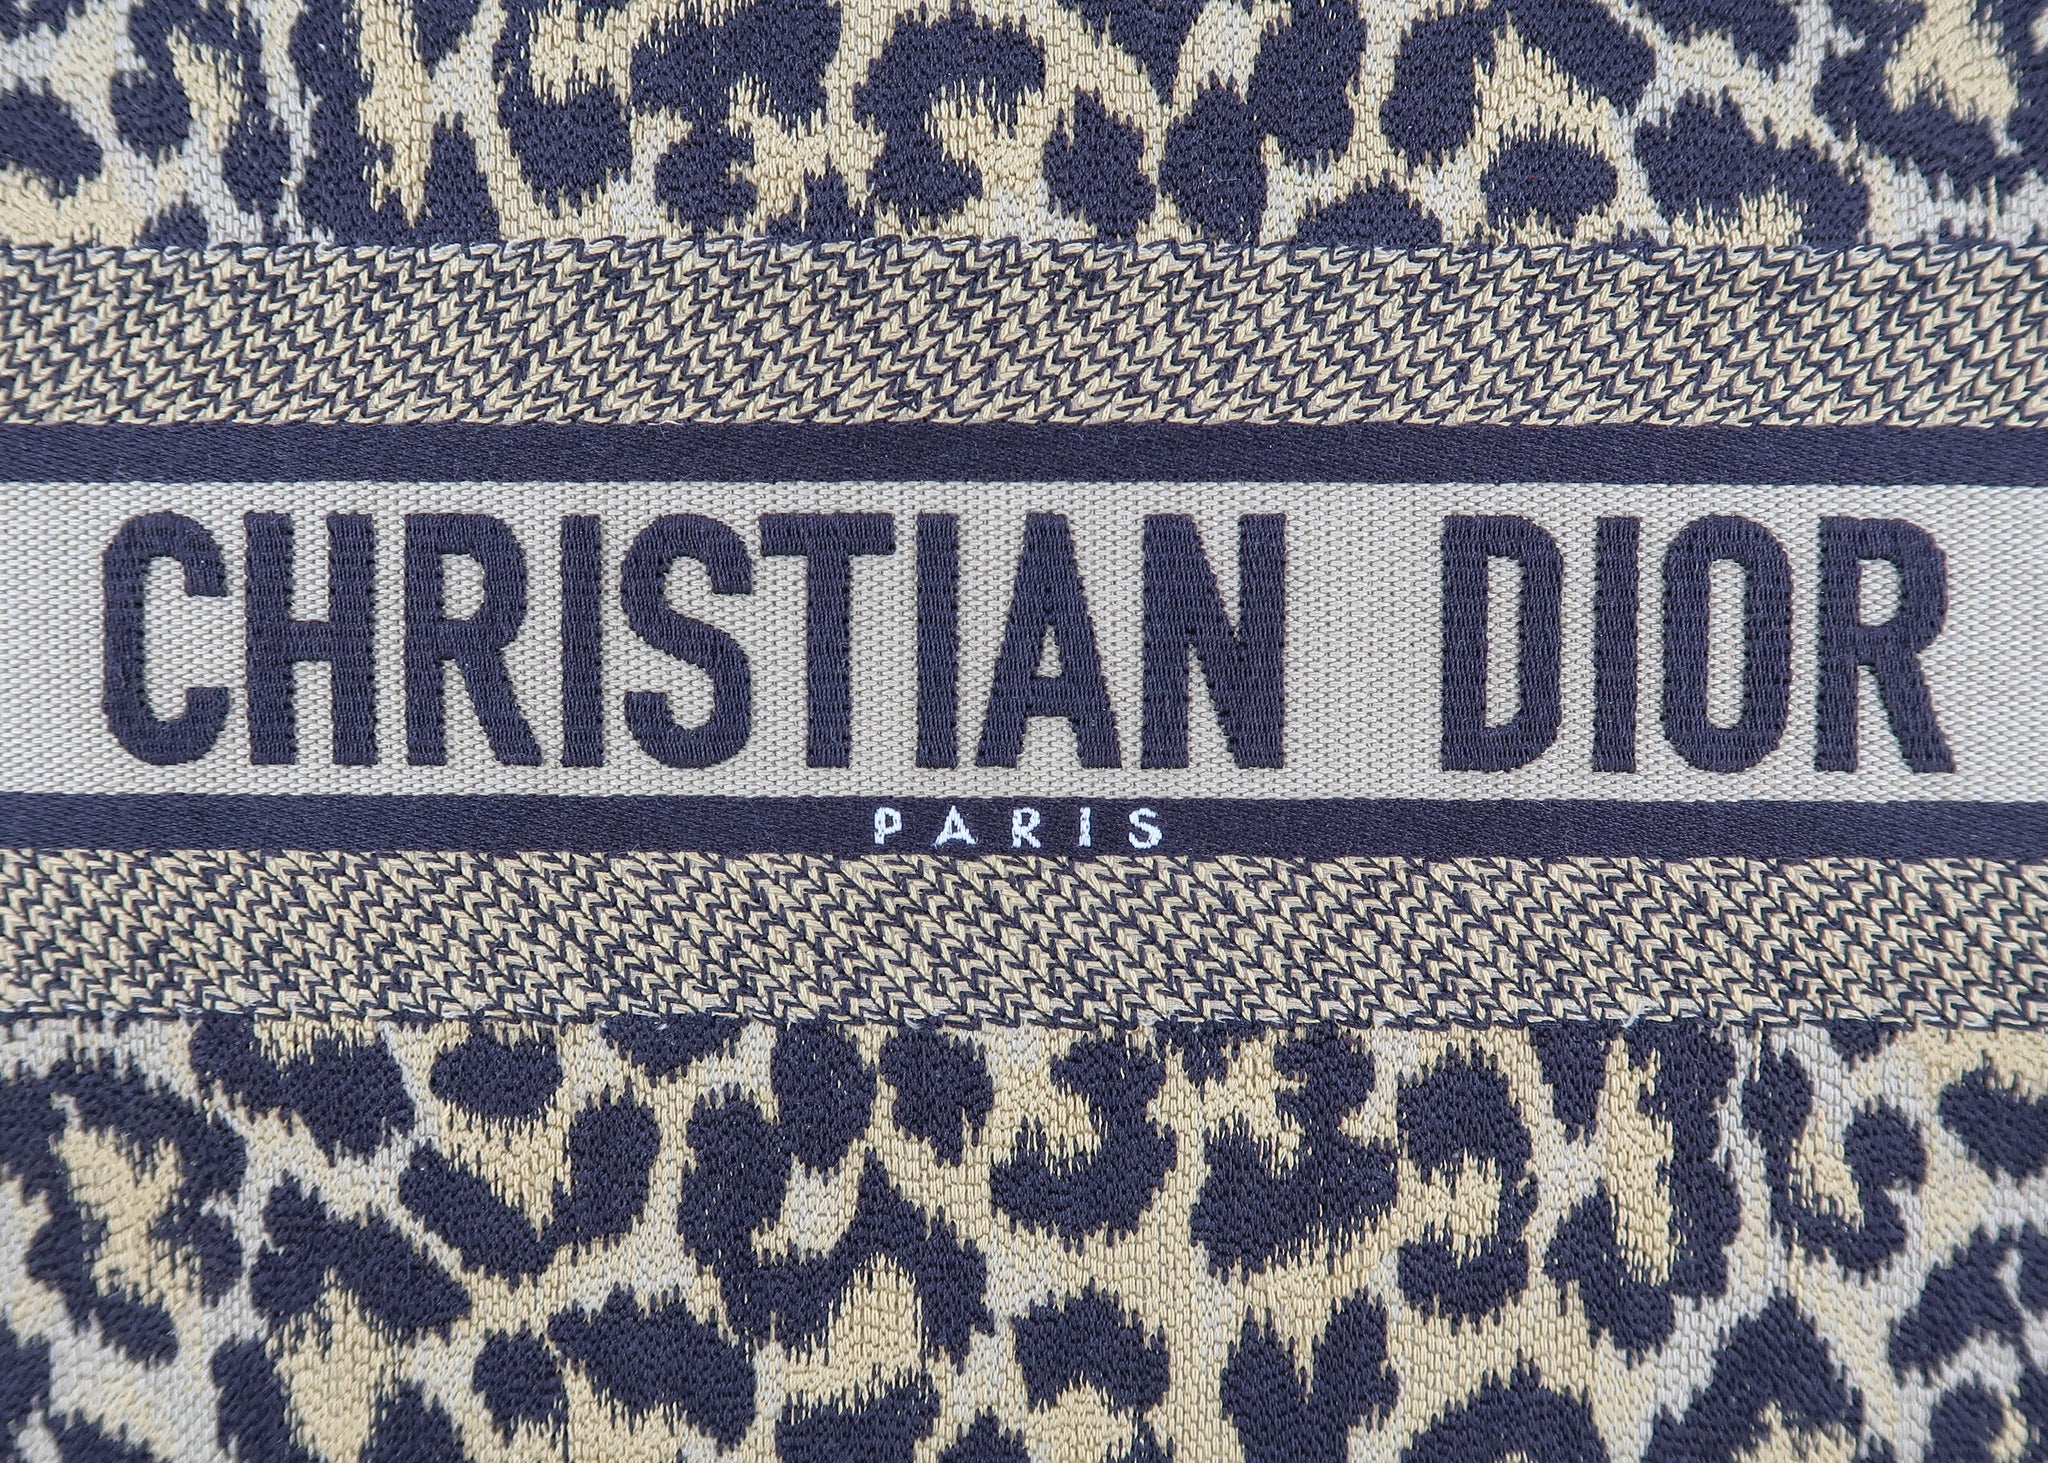 Christian Dior Mizza Book Tote Large Bag Canvas Beige Leopard pattern  50-MA-1201